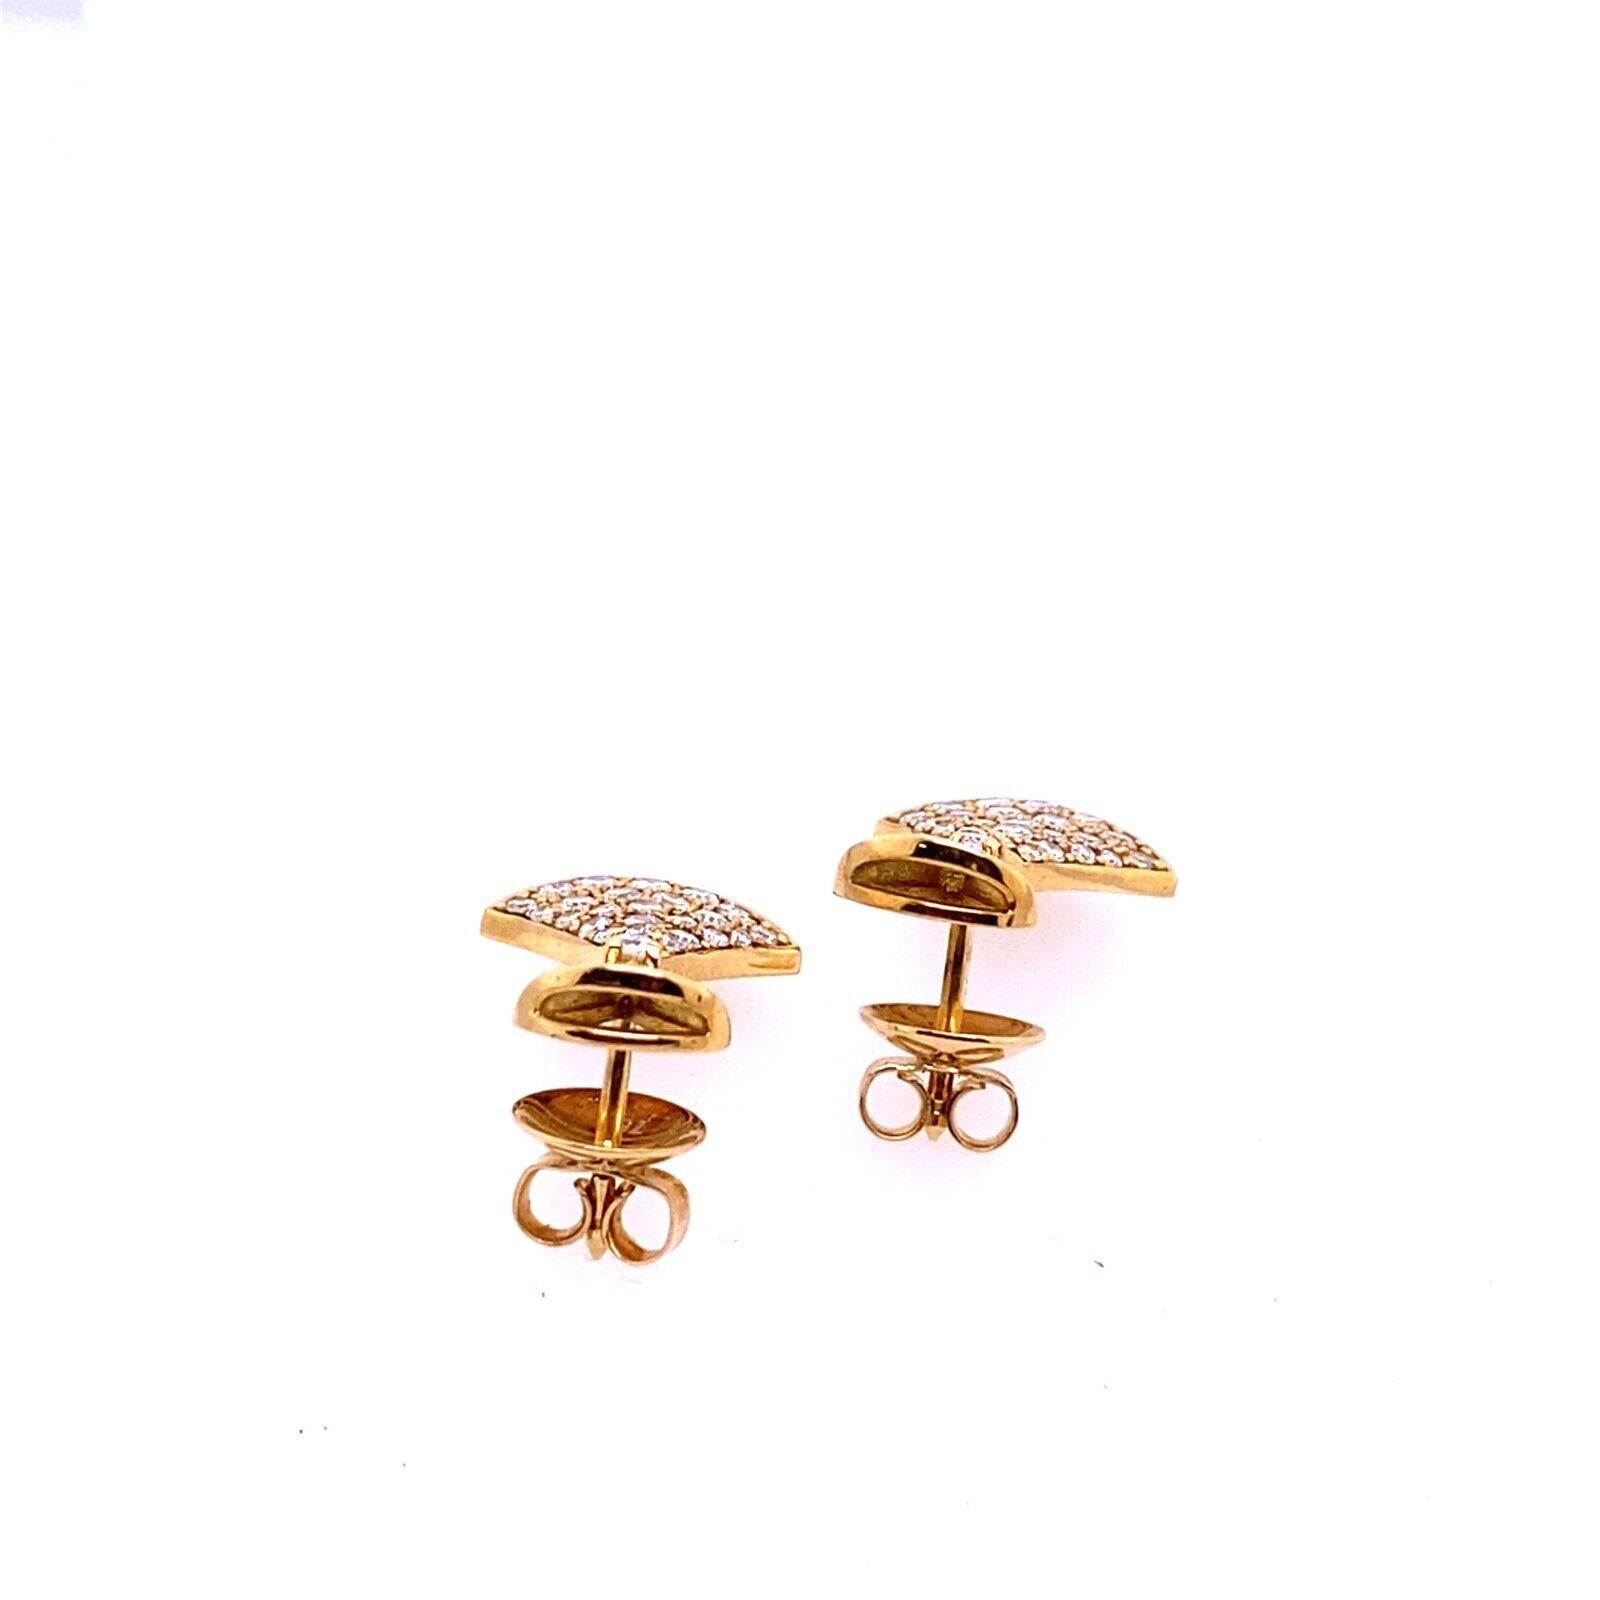 Round Cut Fine Quality Fan Shape Diamond Earrings in 18ct Yellow Gold For Sale